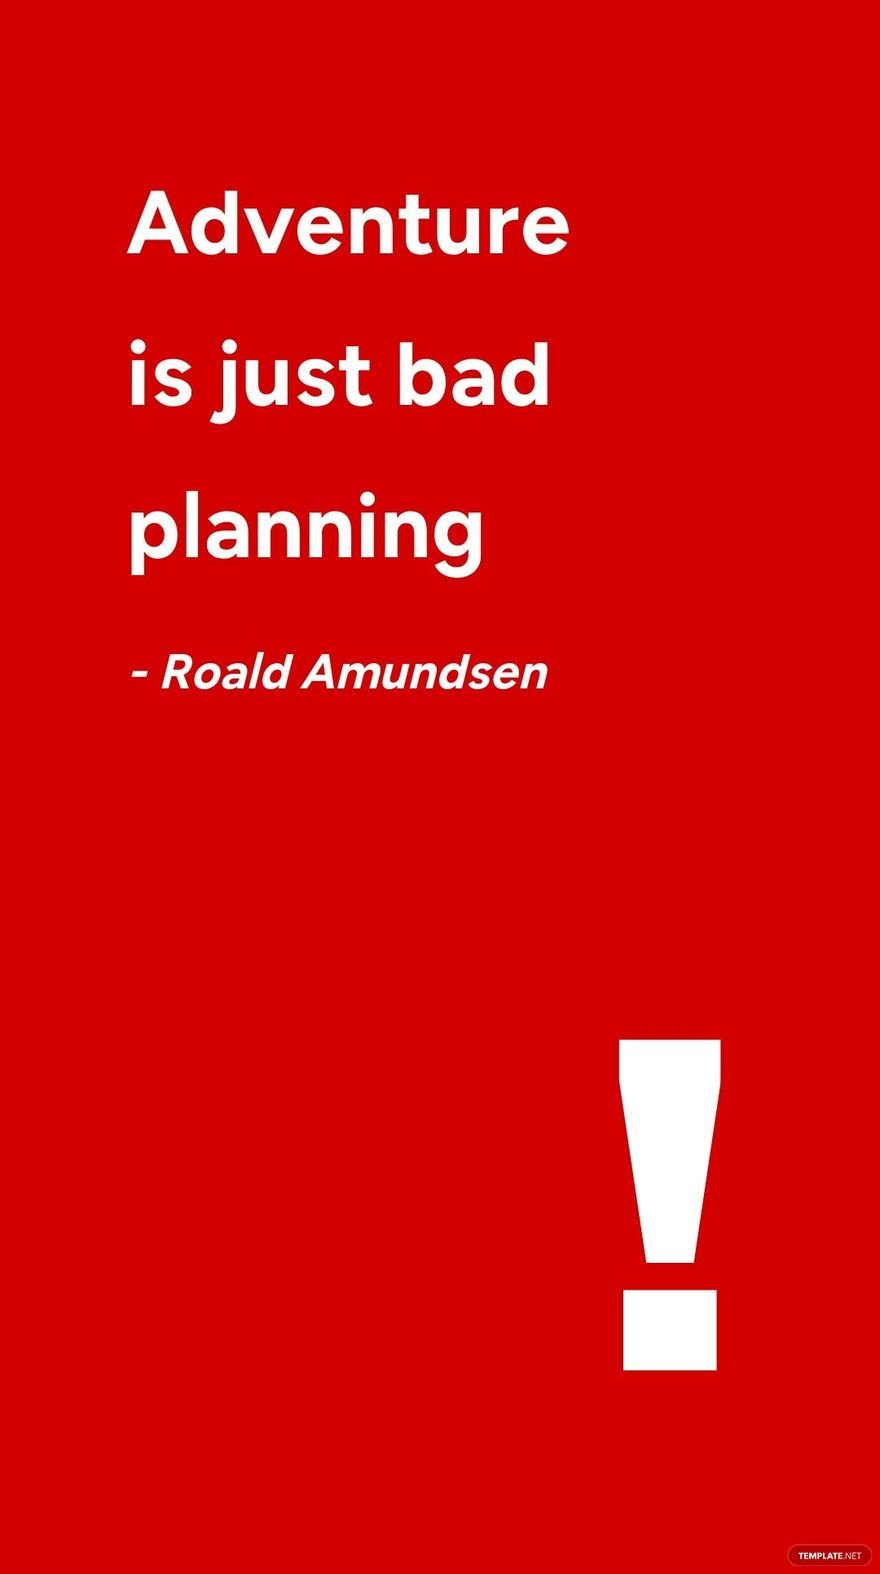 Free Roald Amundsen - Adventure is just bad planning in JPG